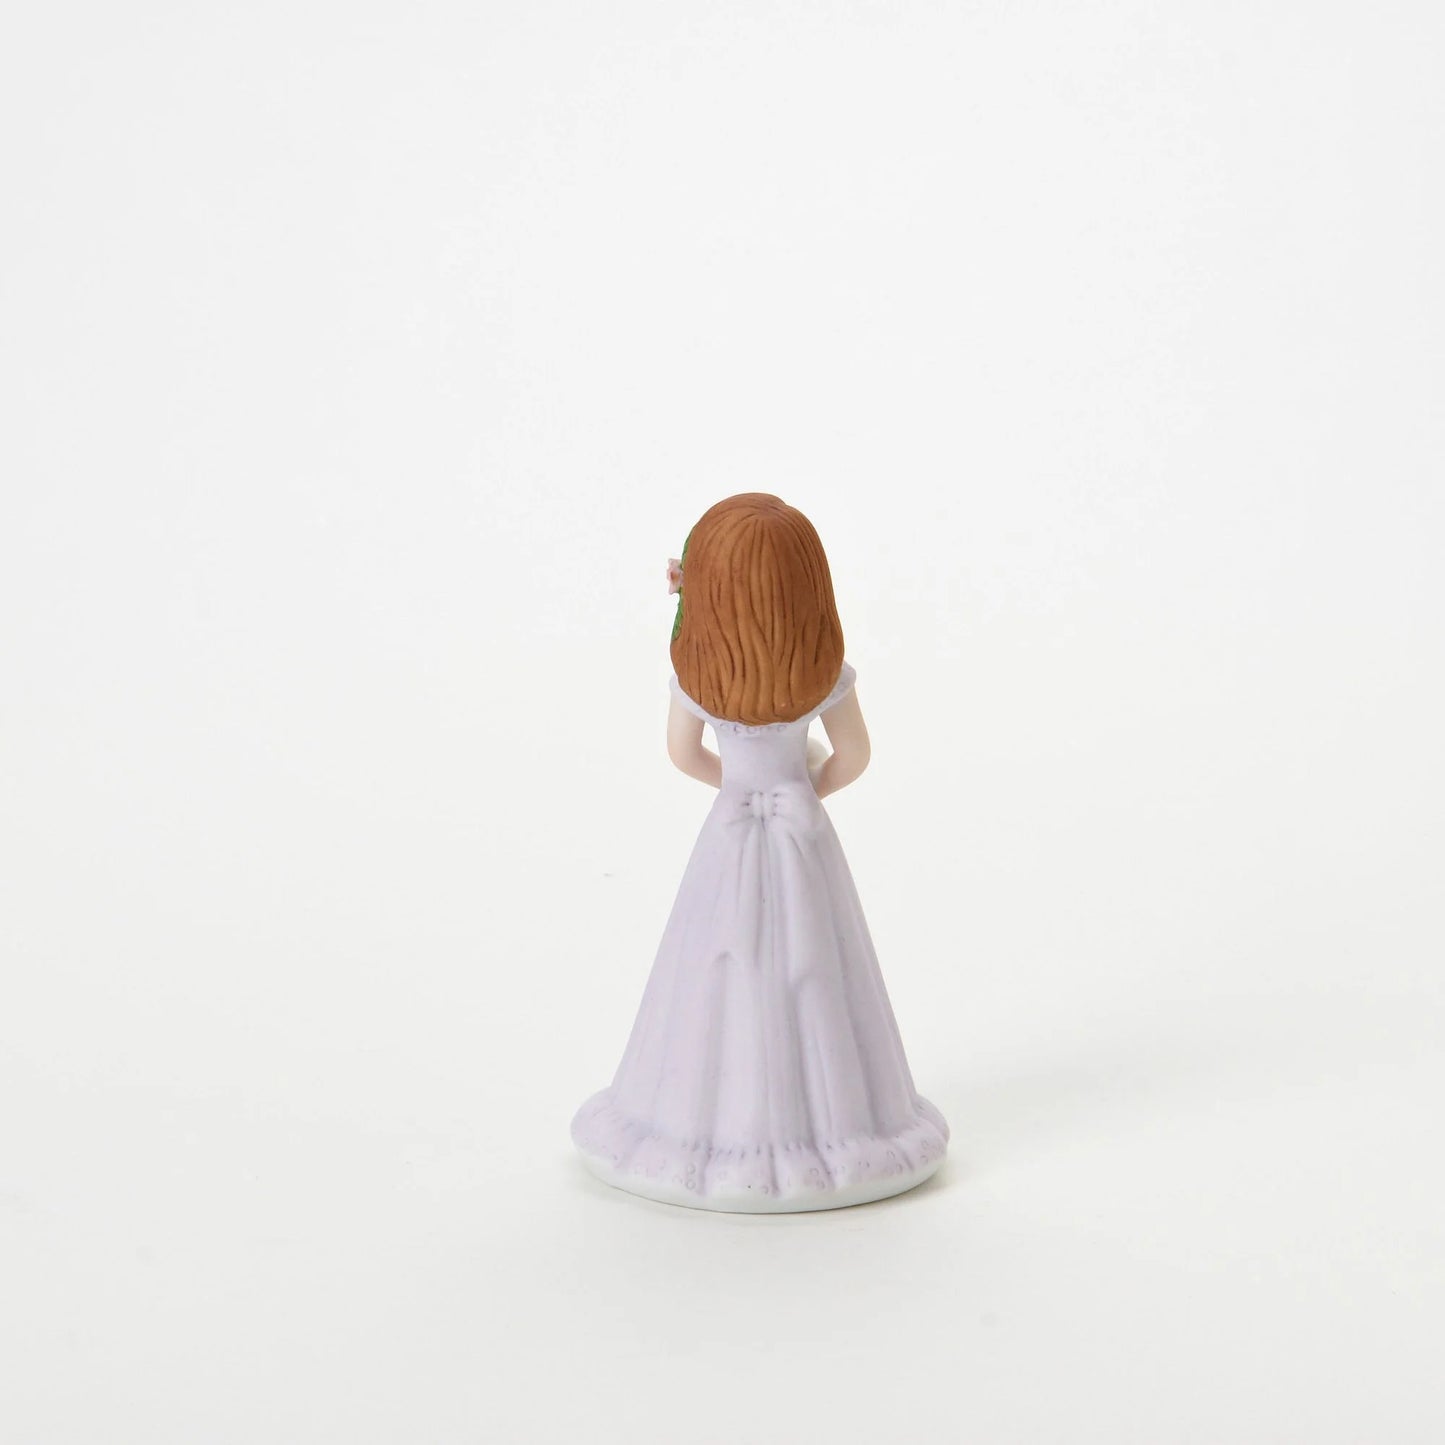 age 8 figurine back